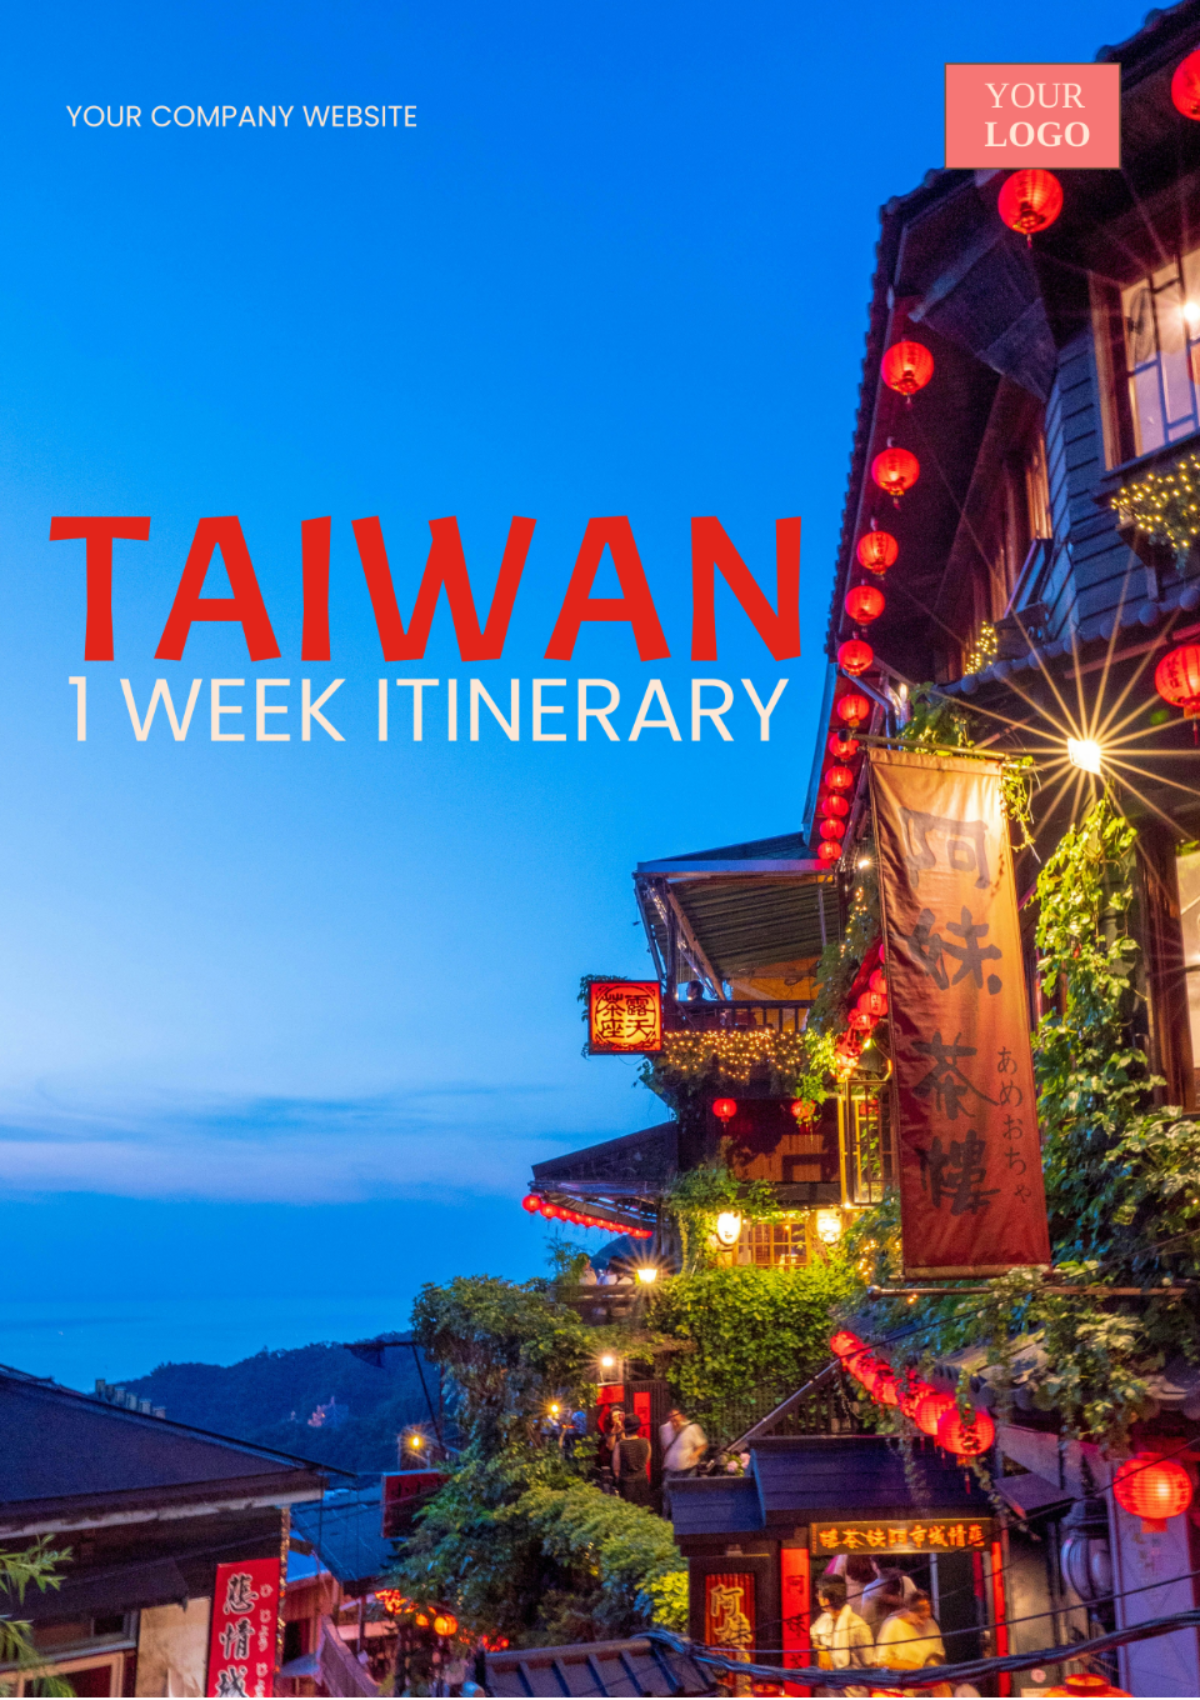 1 Week Taiwan Itinerary Template